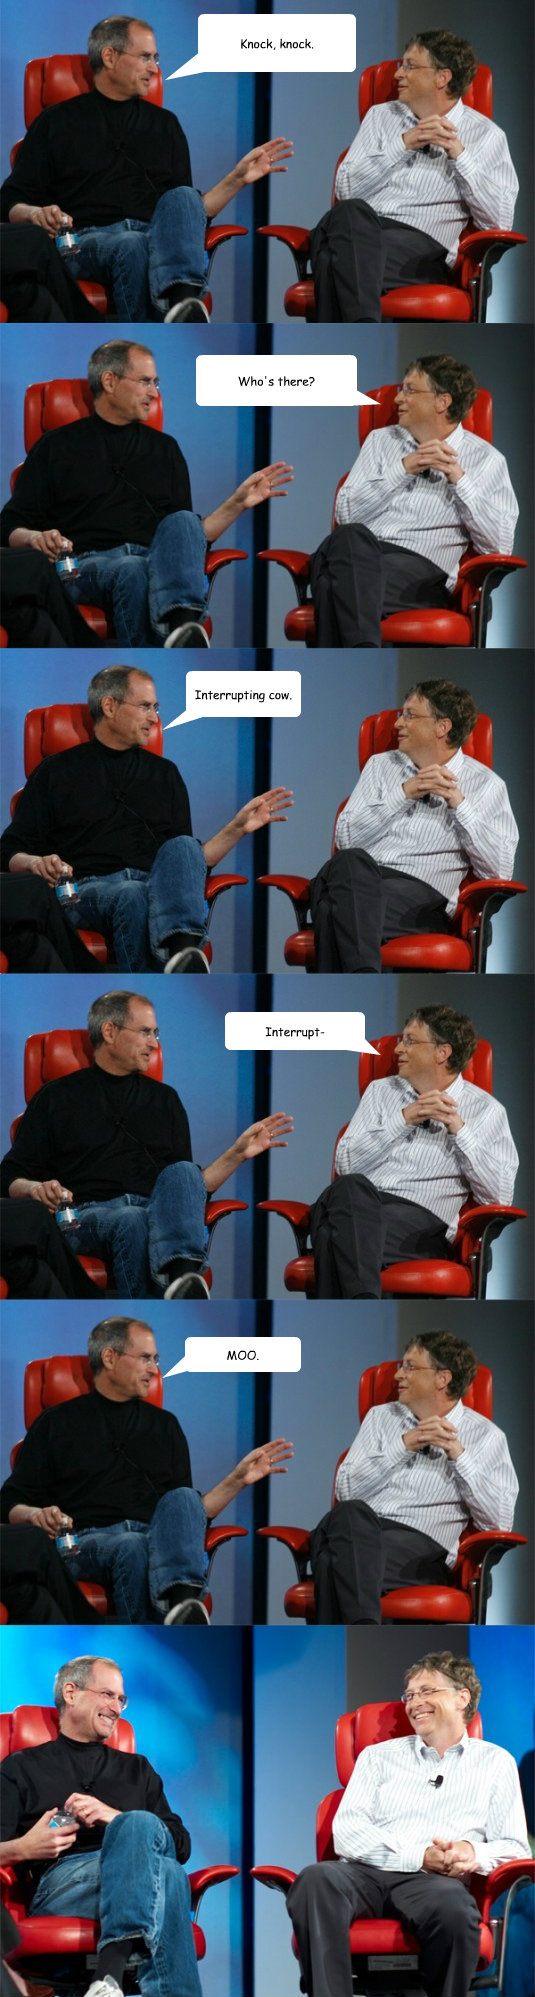 Knock, knock. Who's there? Interrupting cow. Interrupt- MOO.  Steve Jobs vs Bill Gates